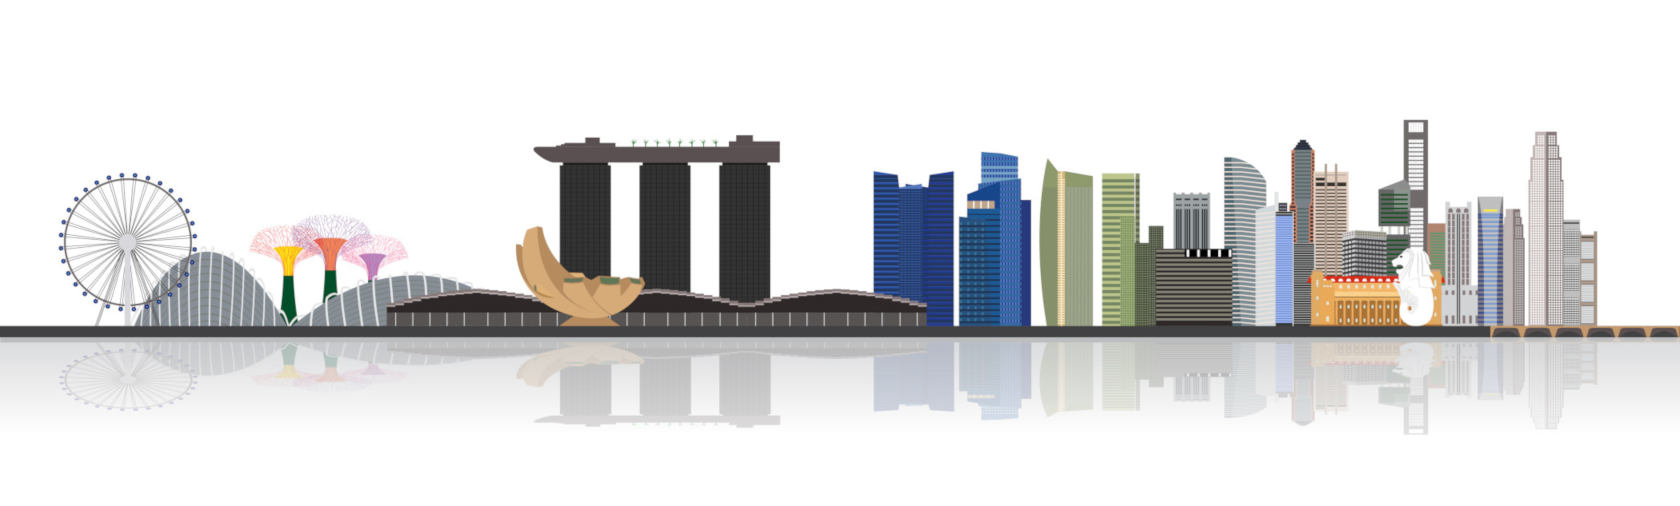 Singapore Skyline illustration from https://www.dreamstime.com/